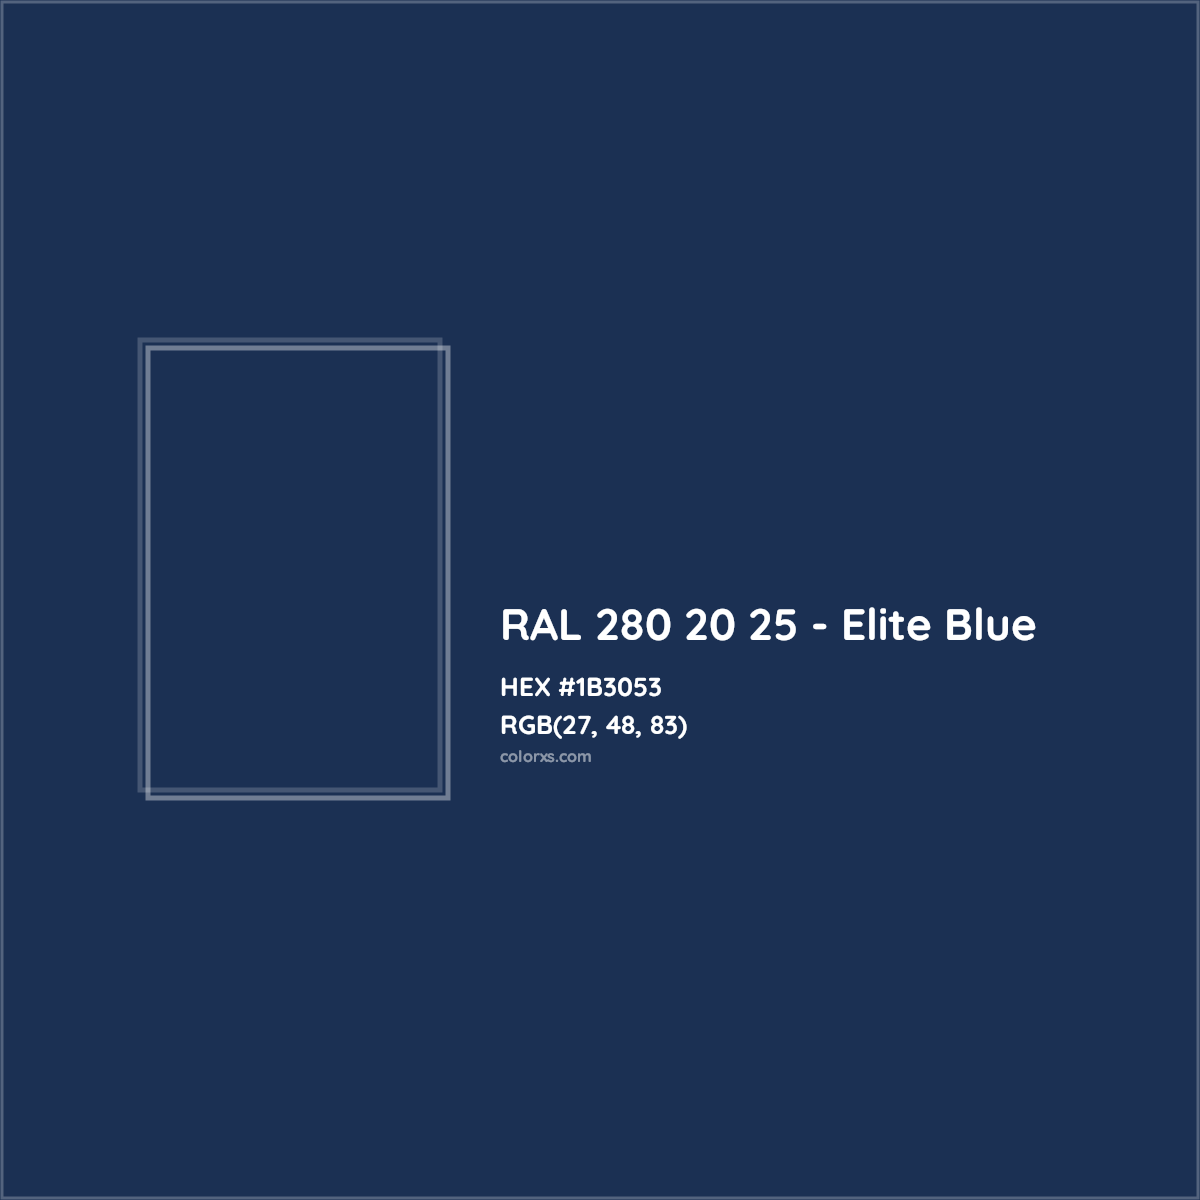 HEX #1B3053 RAL 280 20 25 - Elite Blue CMS RAL Design - Color Code